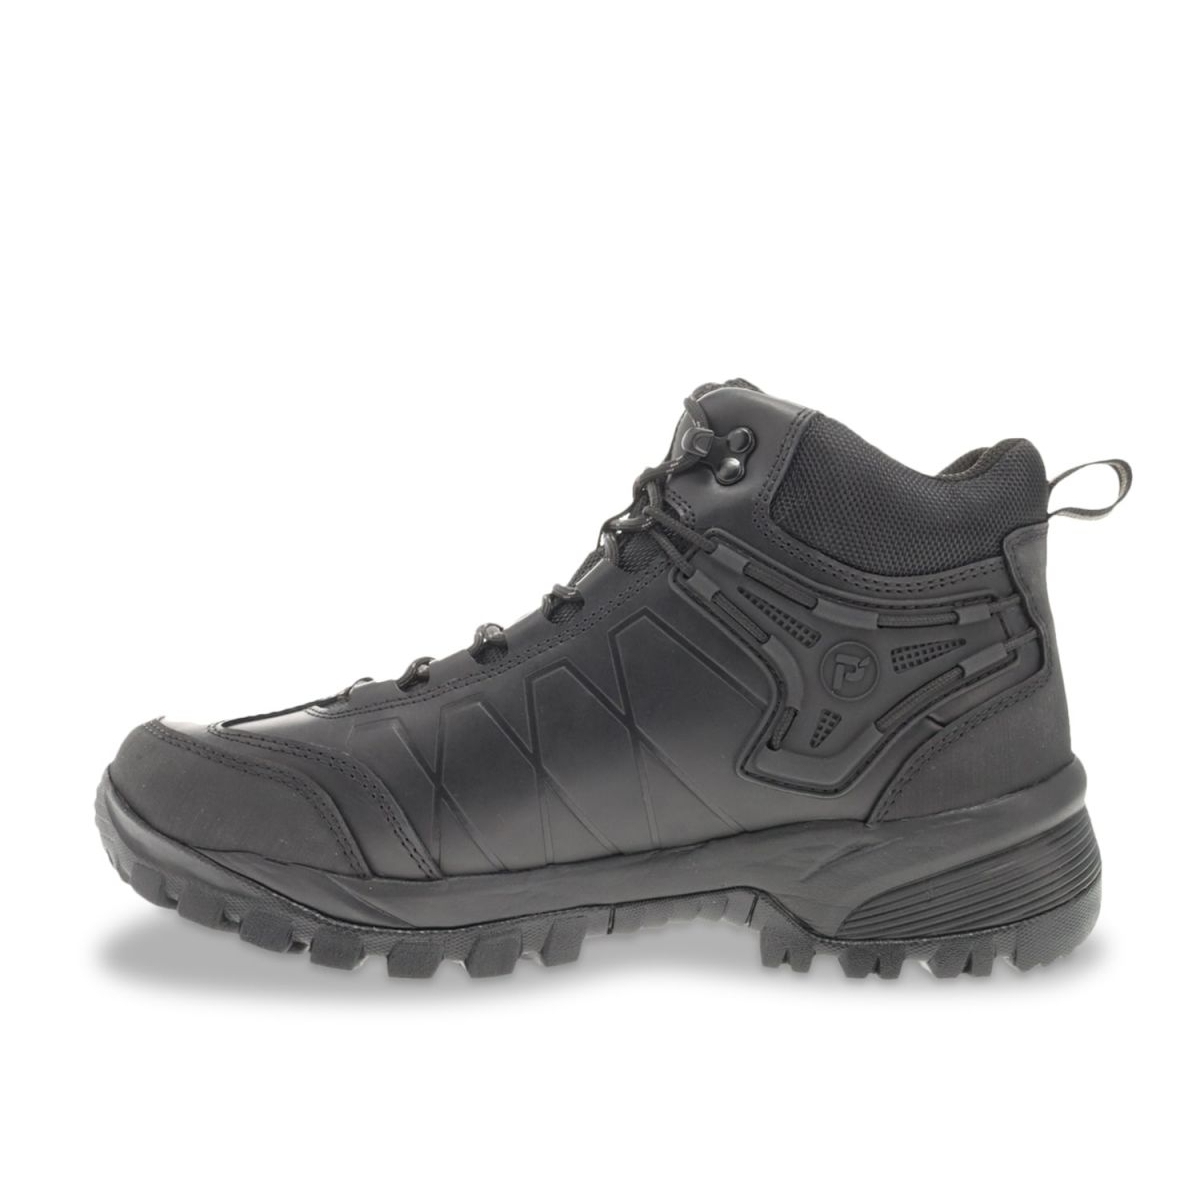 Propet Men's Ridge Walker Force Hiking Boots Black - MBA052LBLK BLACK - BLACK, 14